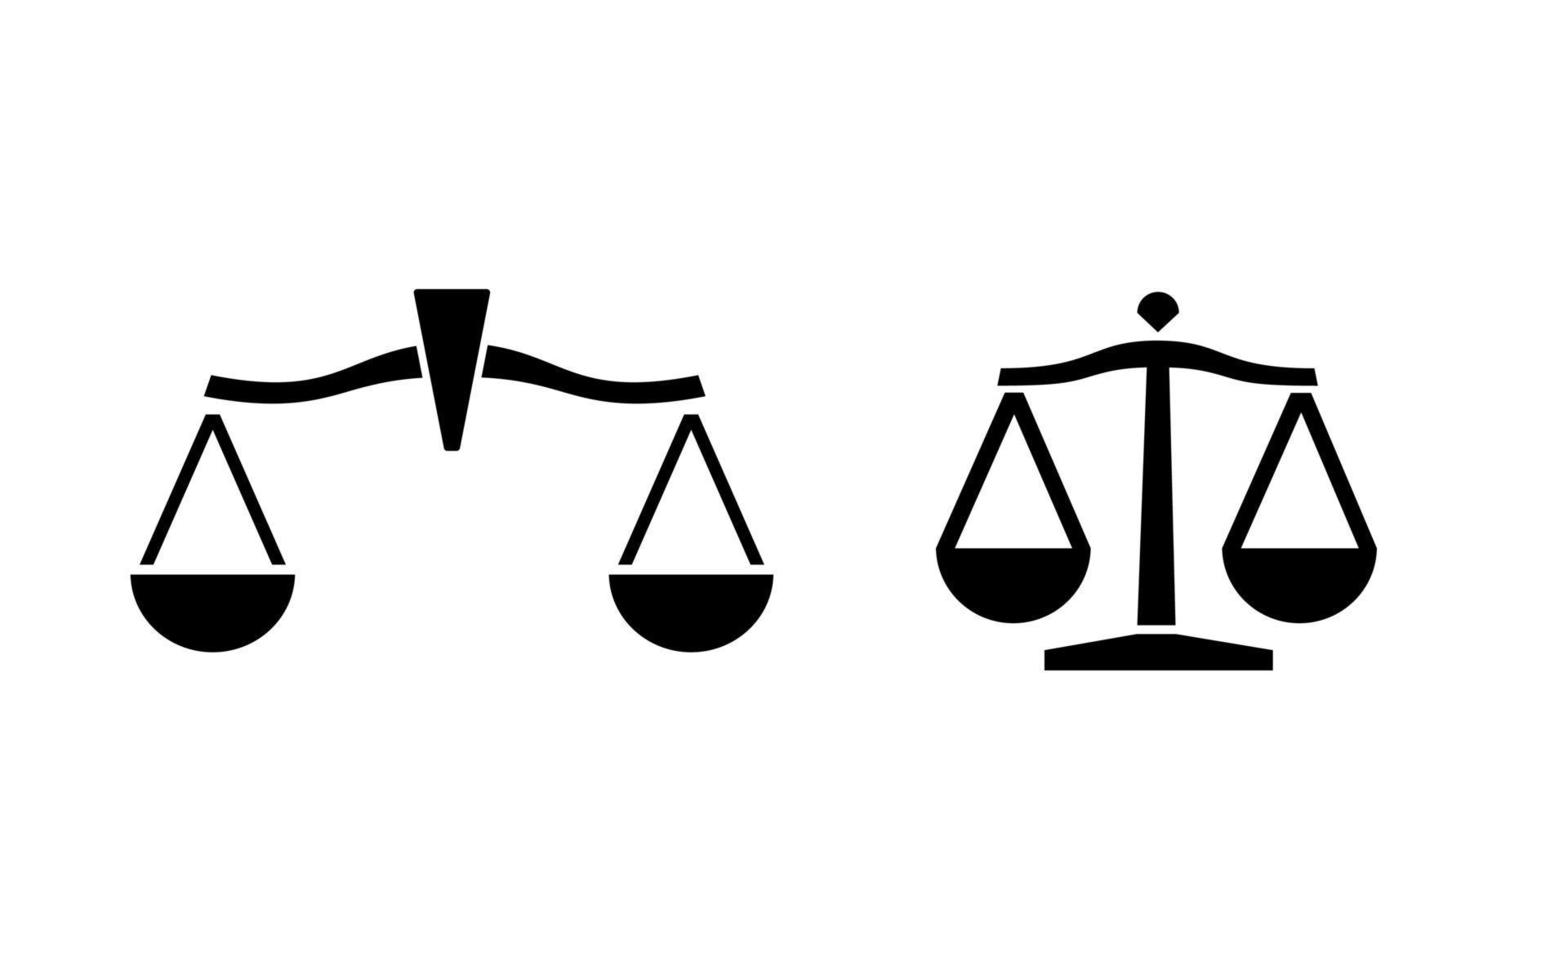 ley juicio legal escalas logo vector